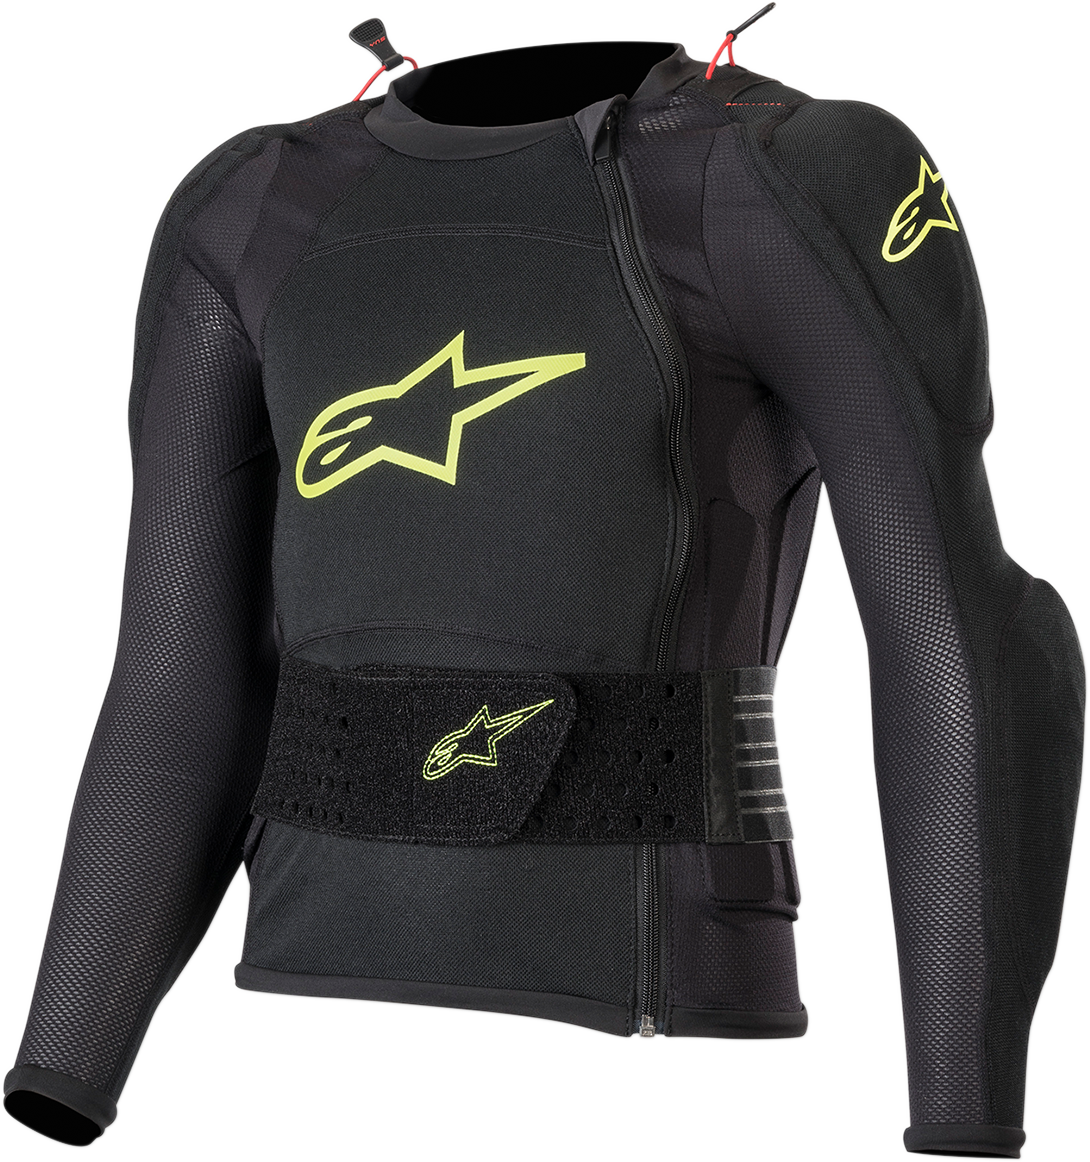 ALPINESTARS Youth Bionic Plus Protection Jacket - Black/Fluo Yellow - Large/XL 6545620-155-LXL